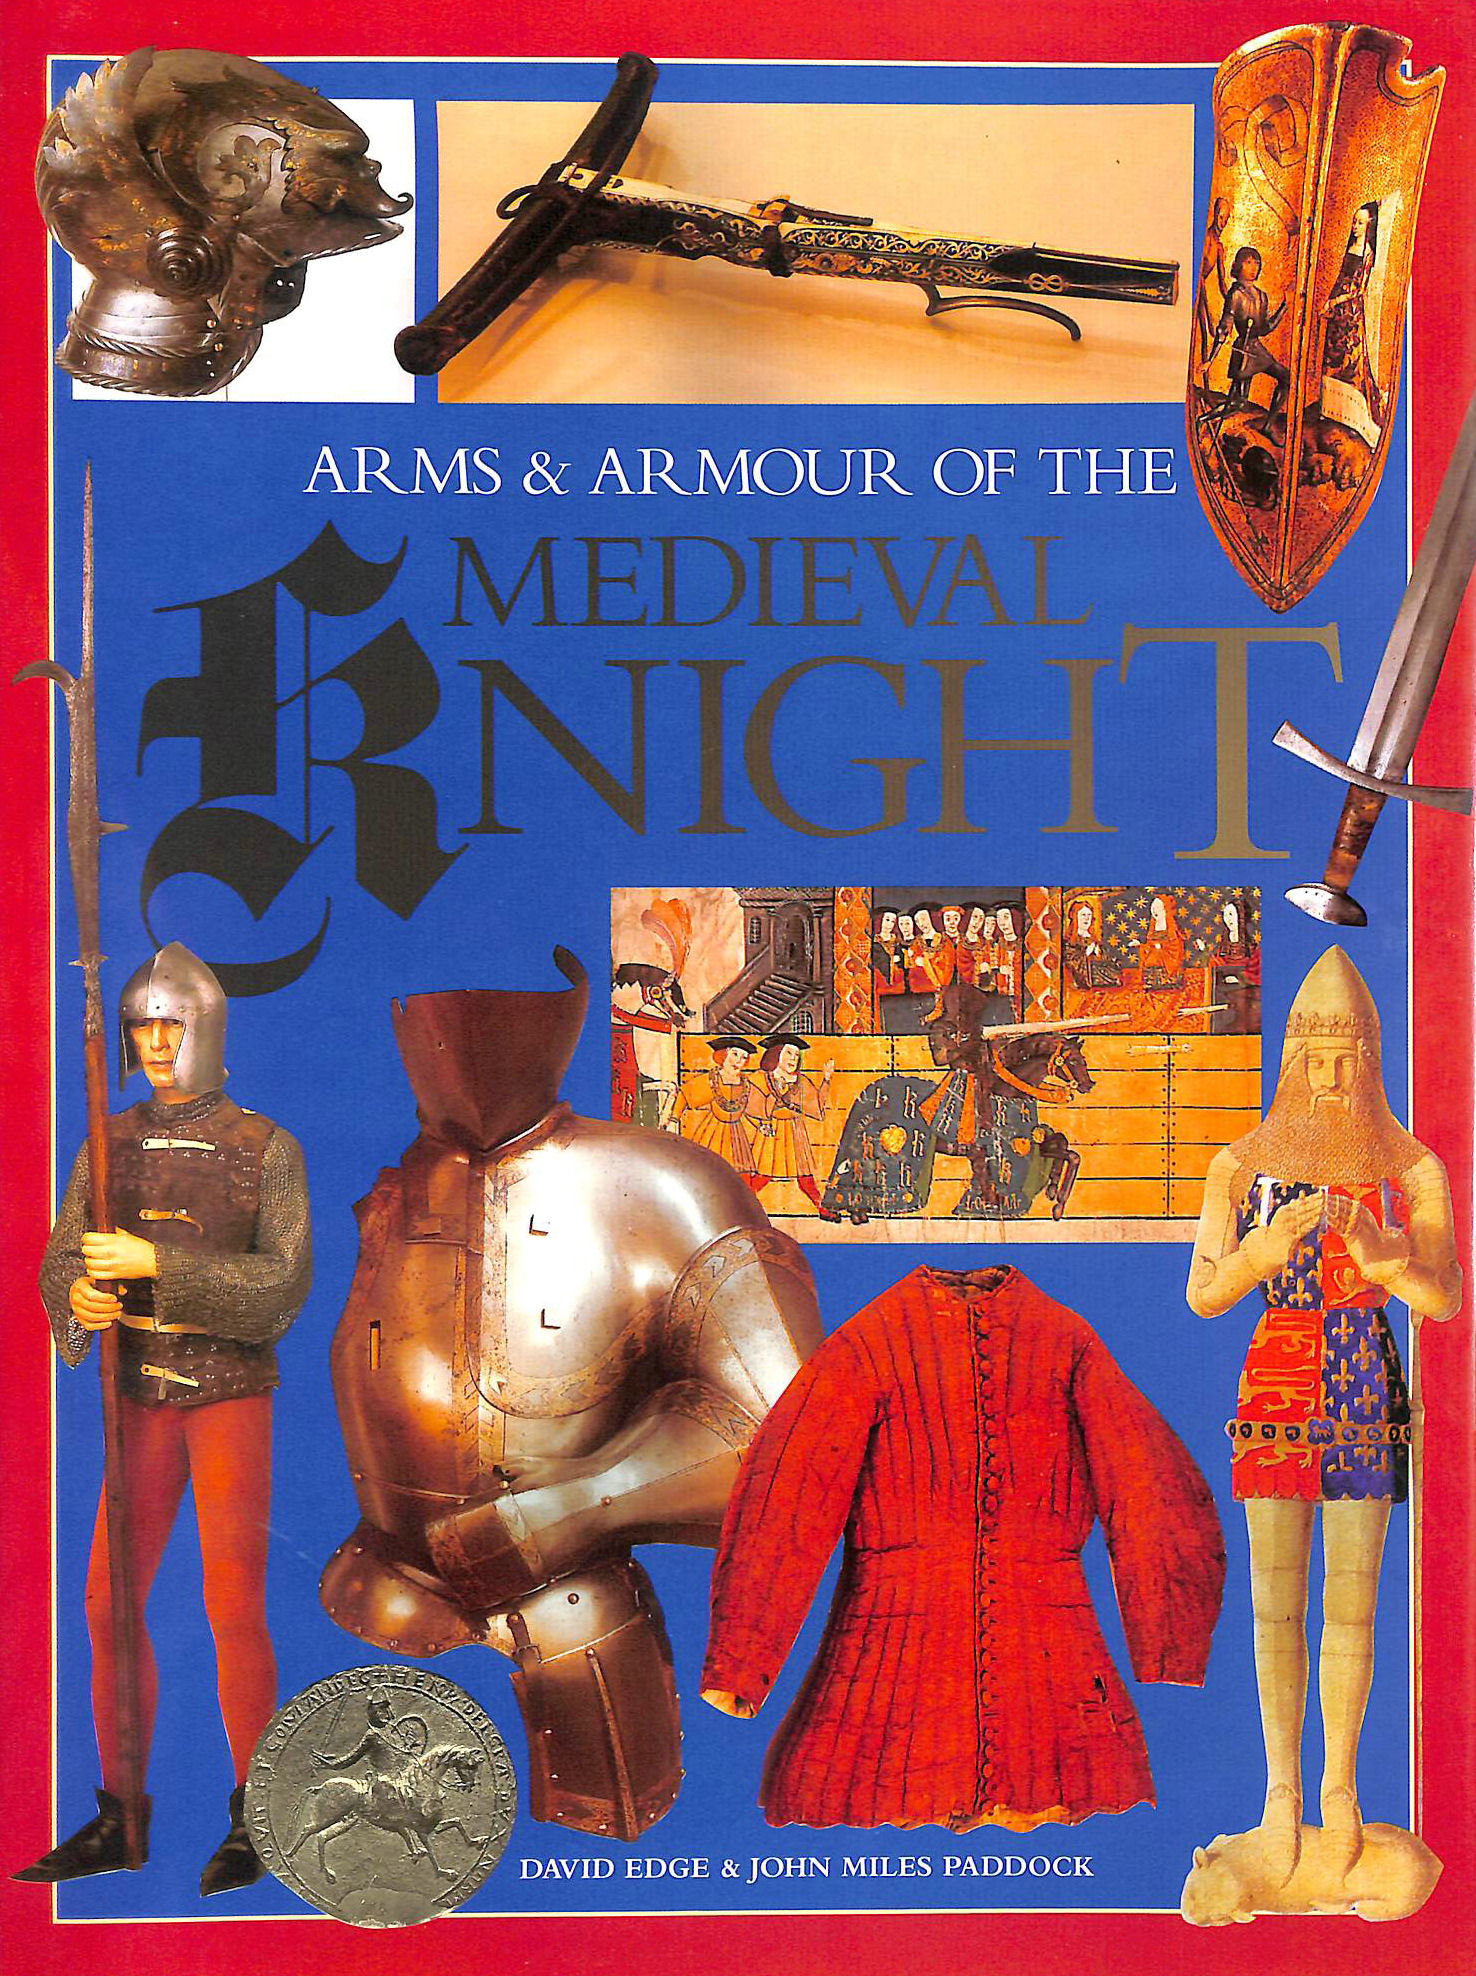 DAVID EDGE & JOHN MILES PADDOCK - Arms & Armour Of The Medieval Knight,